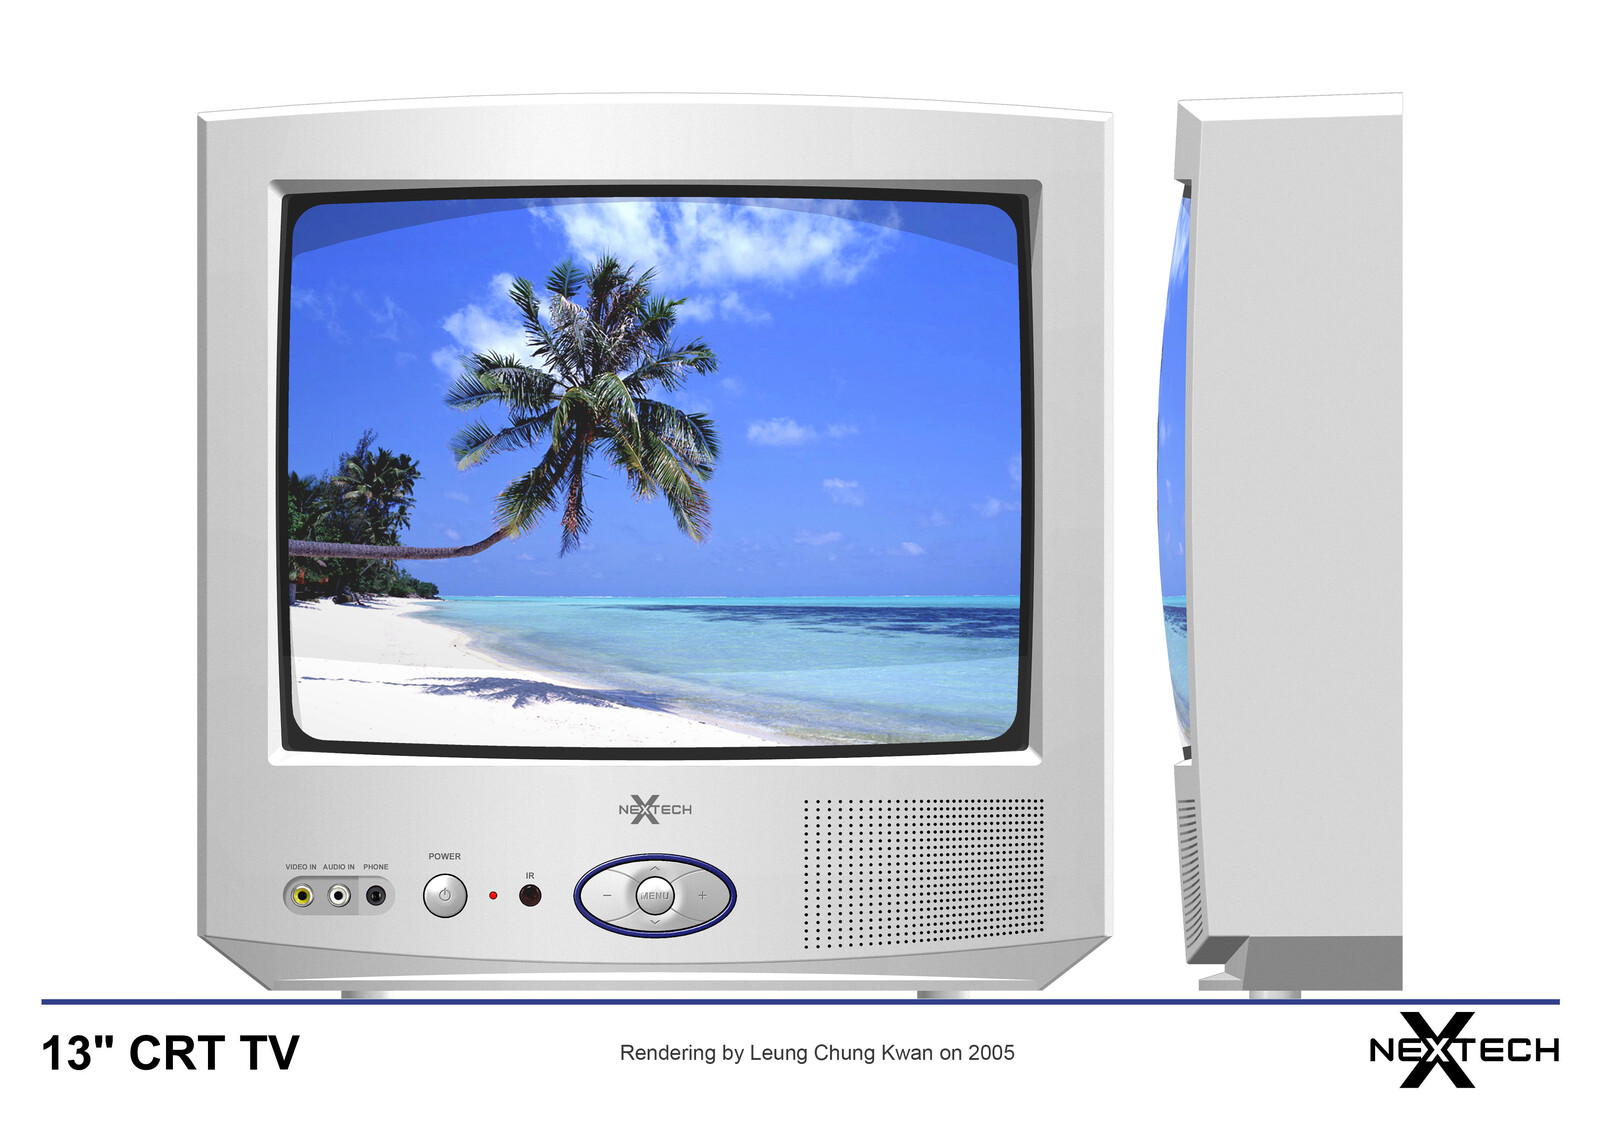 💎 13" CRT TV | Rendering by Leung Chung Kwan on 2005 💎
Brand Name︰NEXTECH | Client︰Star Light Electronics Co., Ltd.